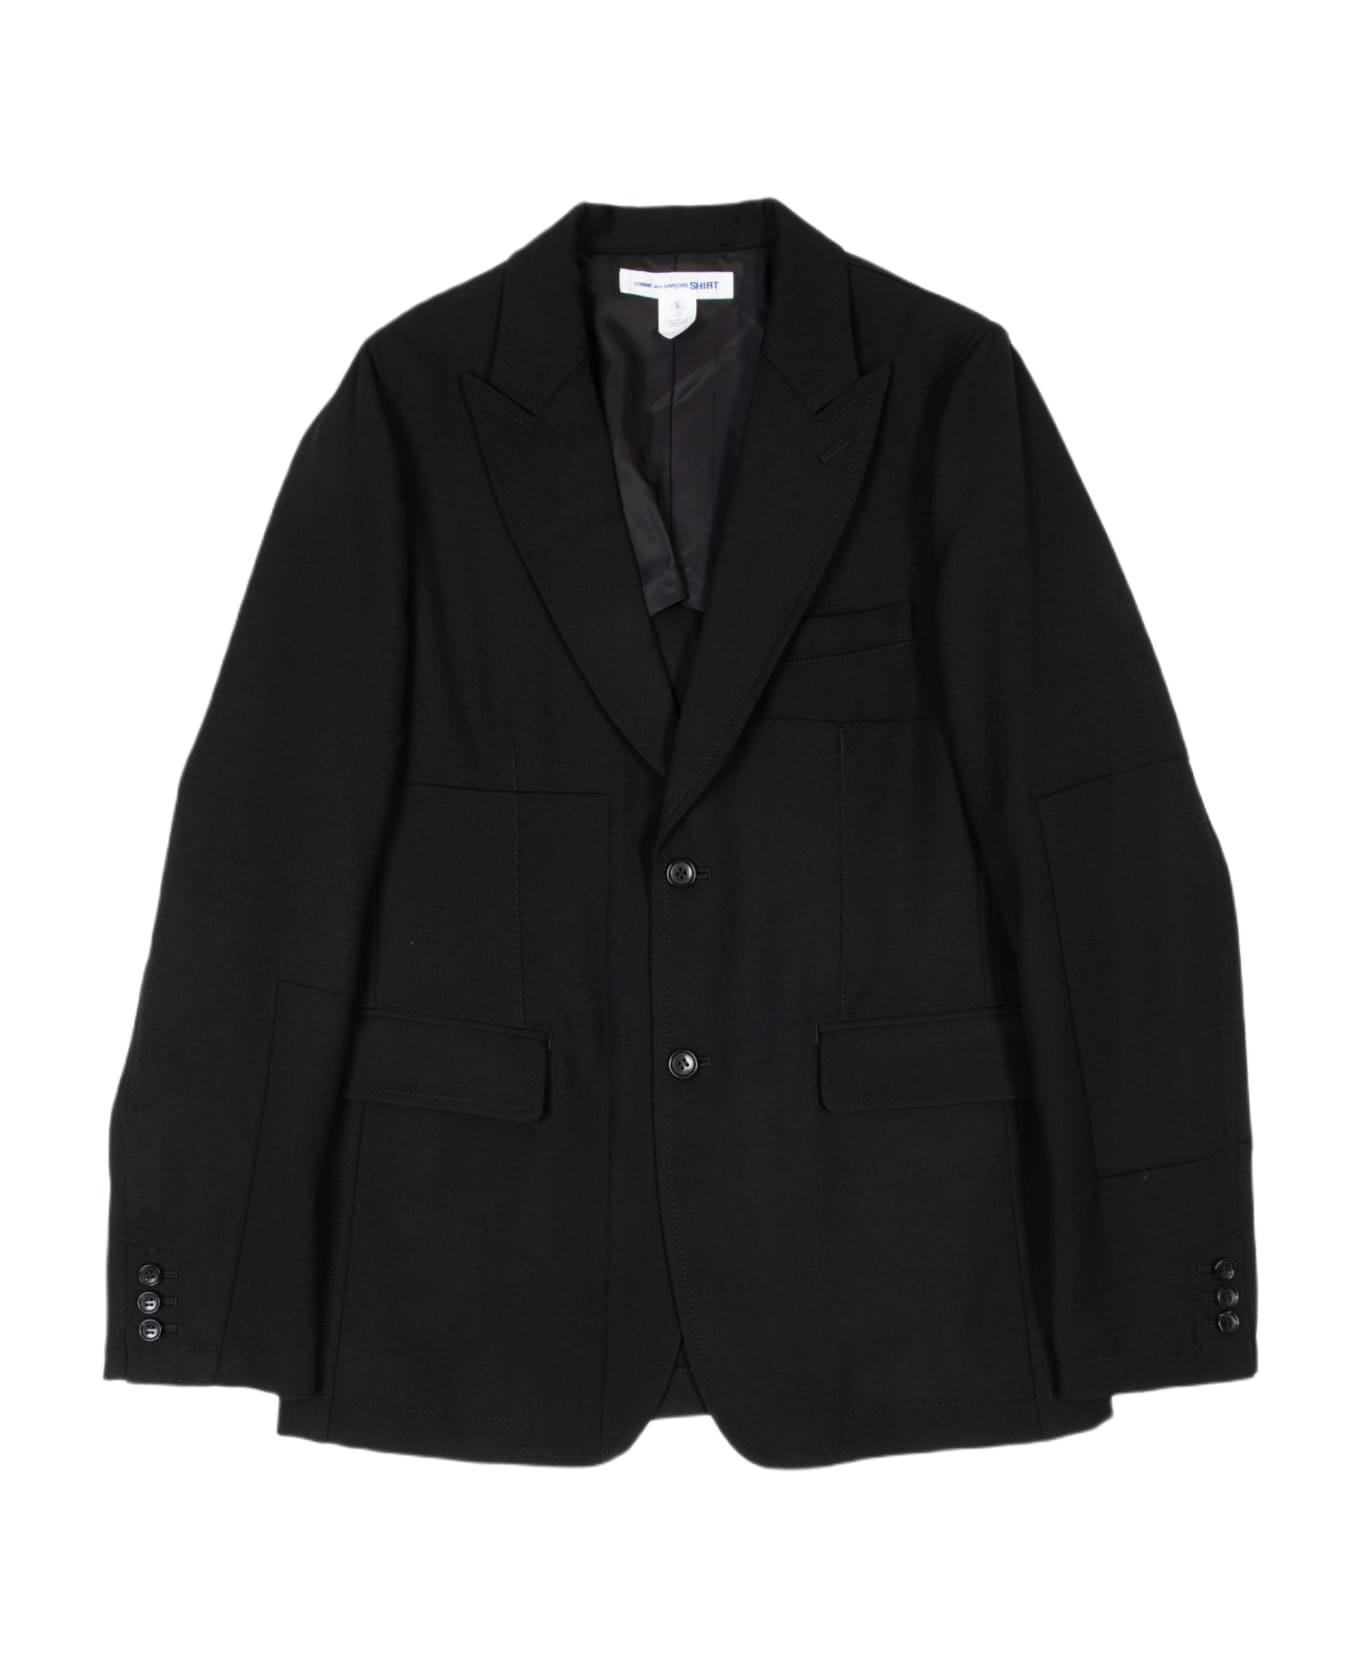 Comme des Garçons Shirt Mens Jacket Woven Black wool patchwork blazer with peak lapel - Nero ブレザー